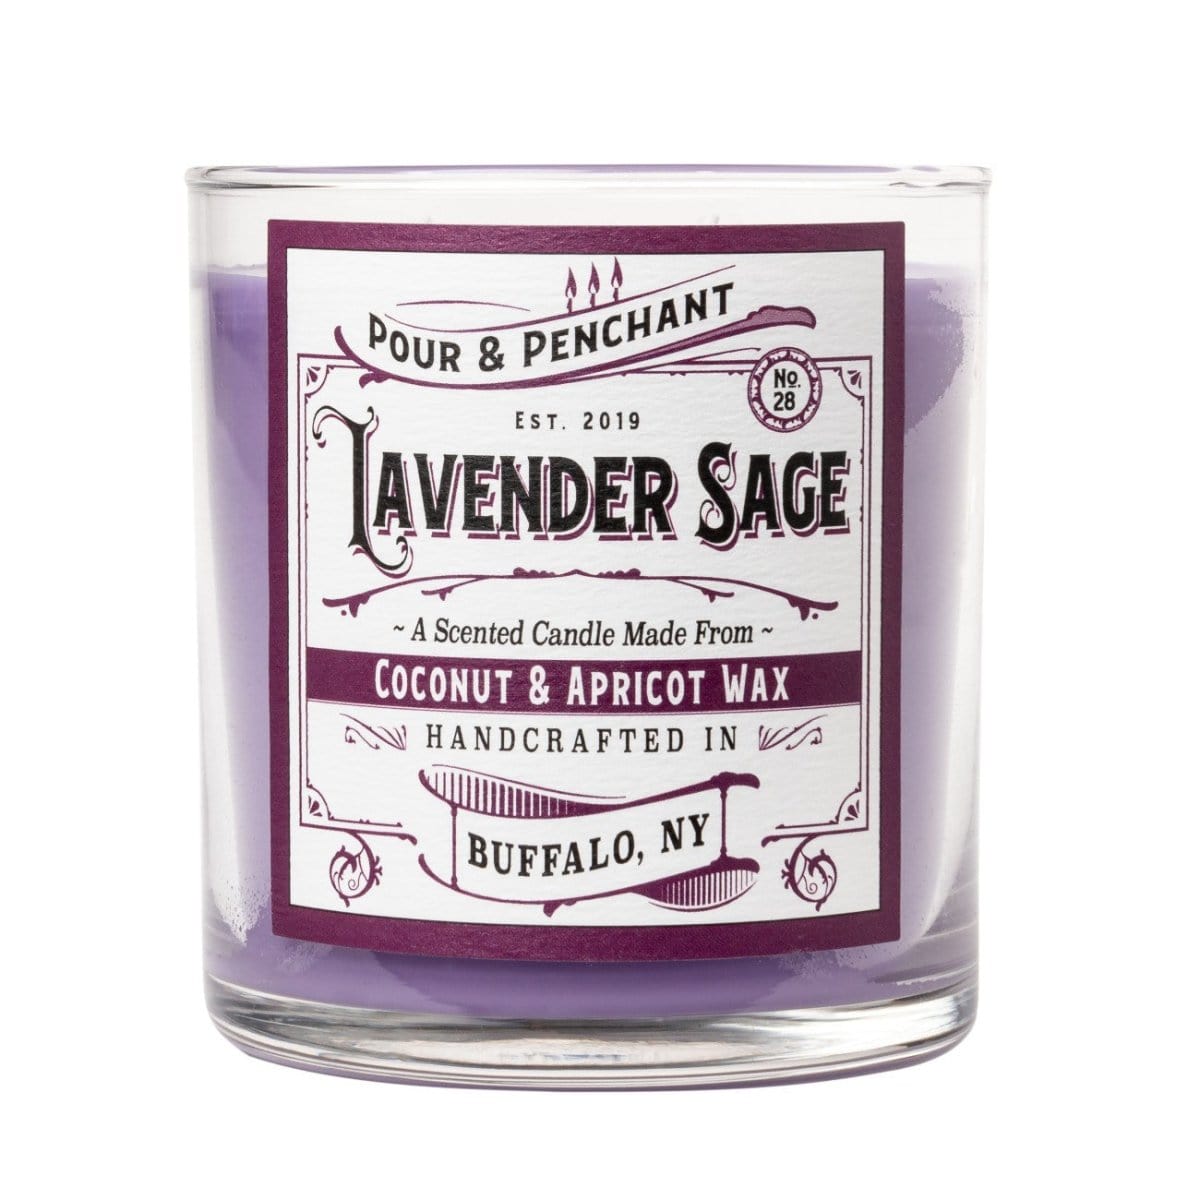 Pour & Penchant 10 oz Scented Candle - LAVENDER SAGE no.28 - Lavender, Sage & Green Leaves